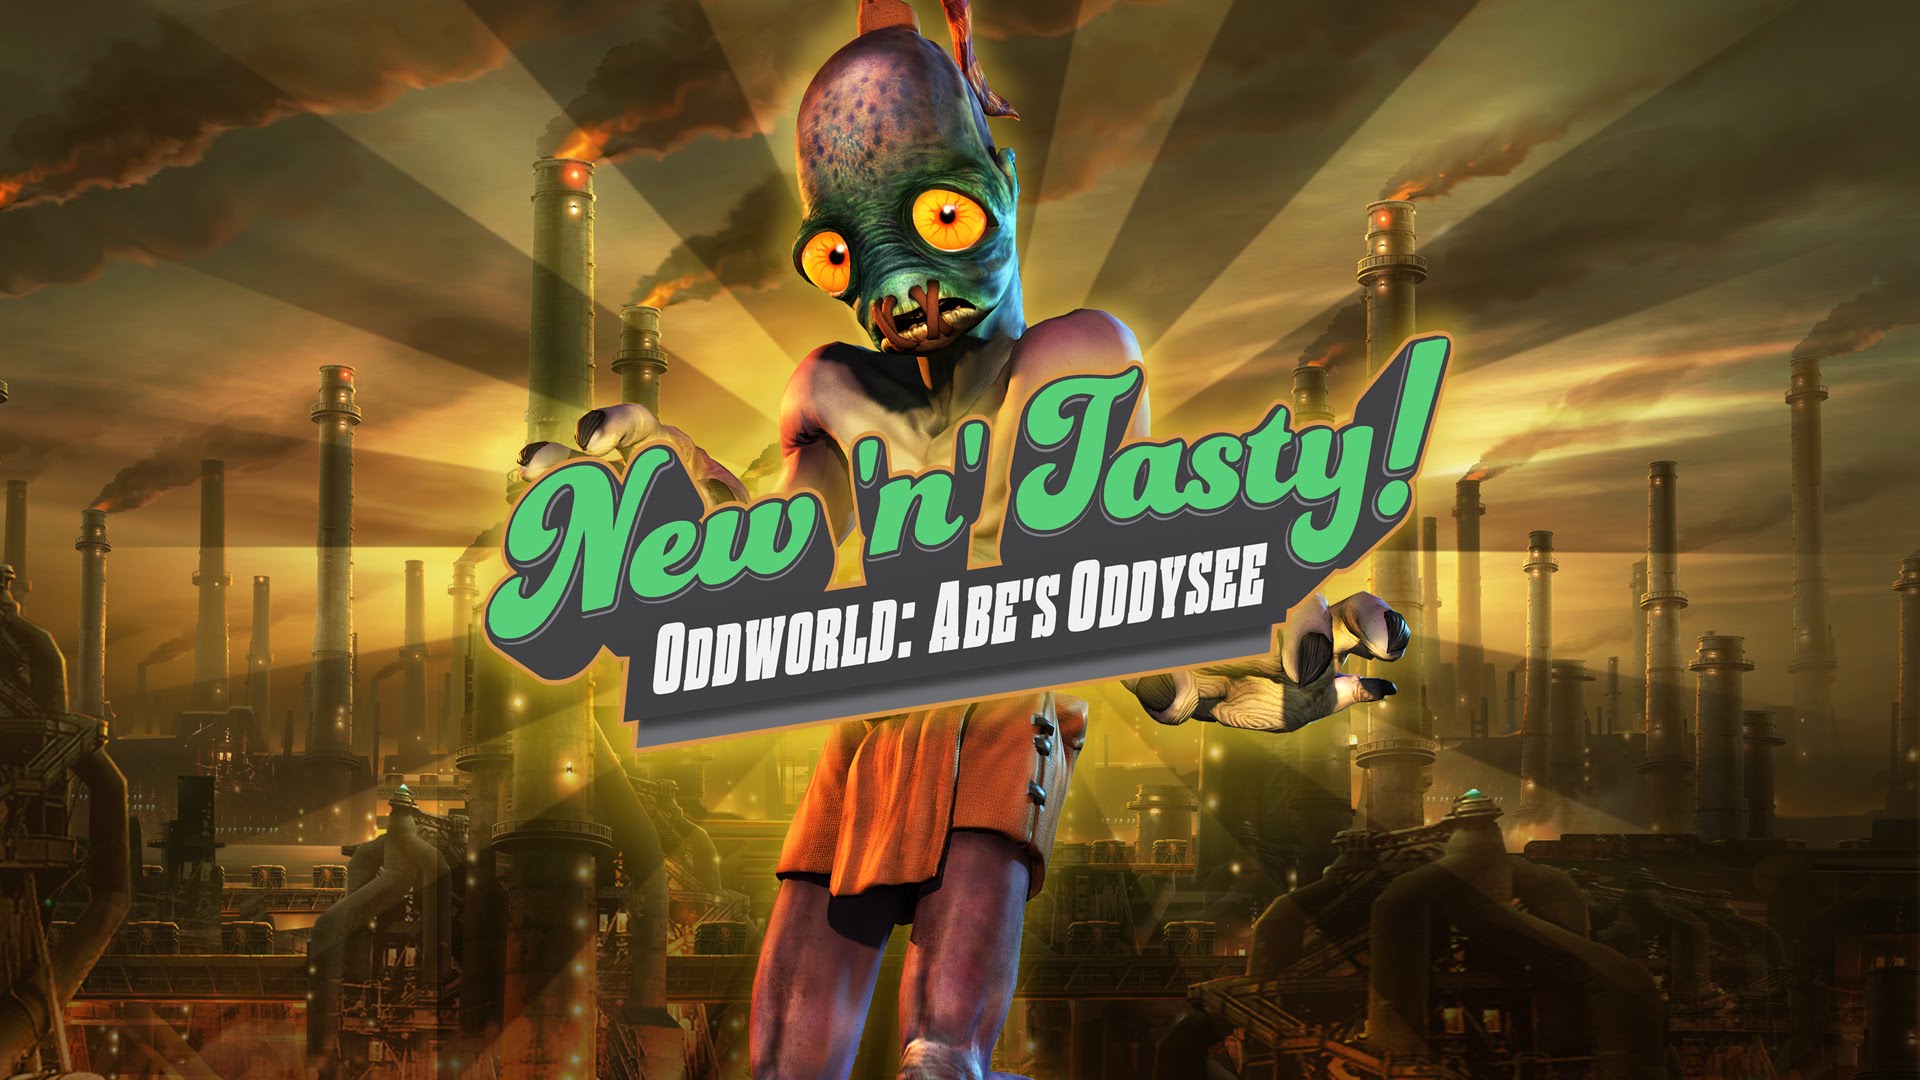 Oddworld: New N Tasty